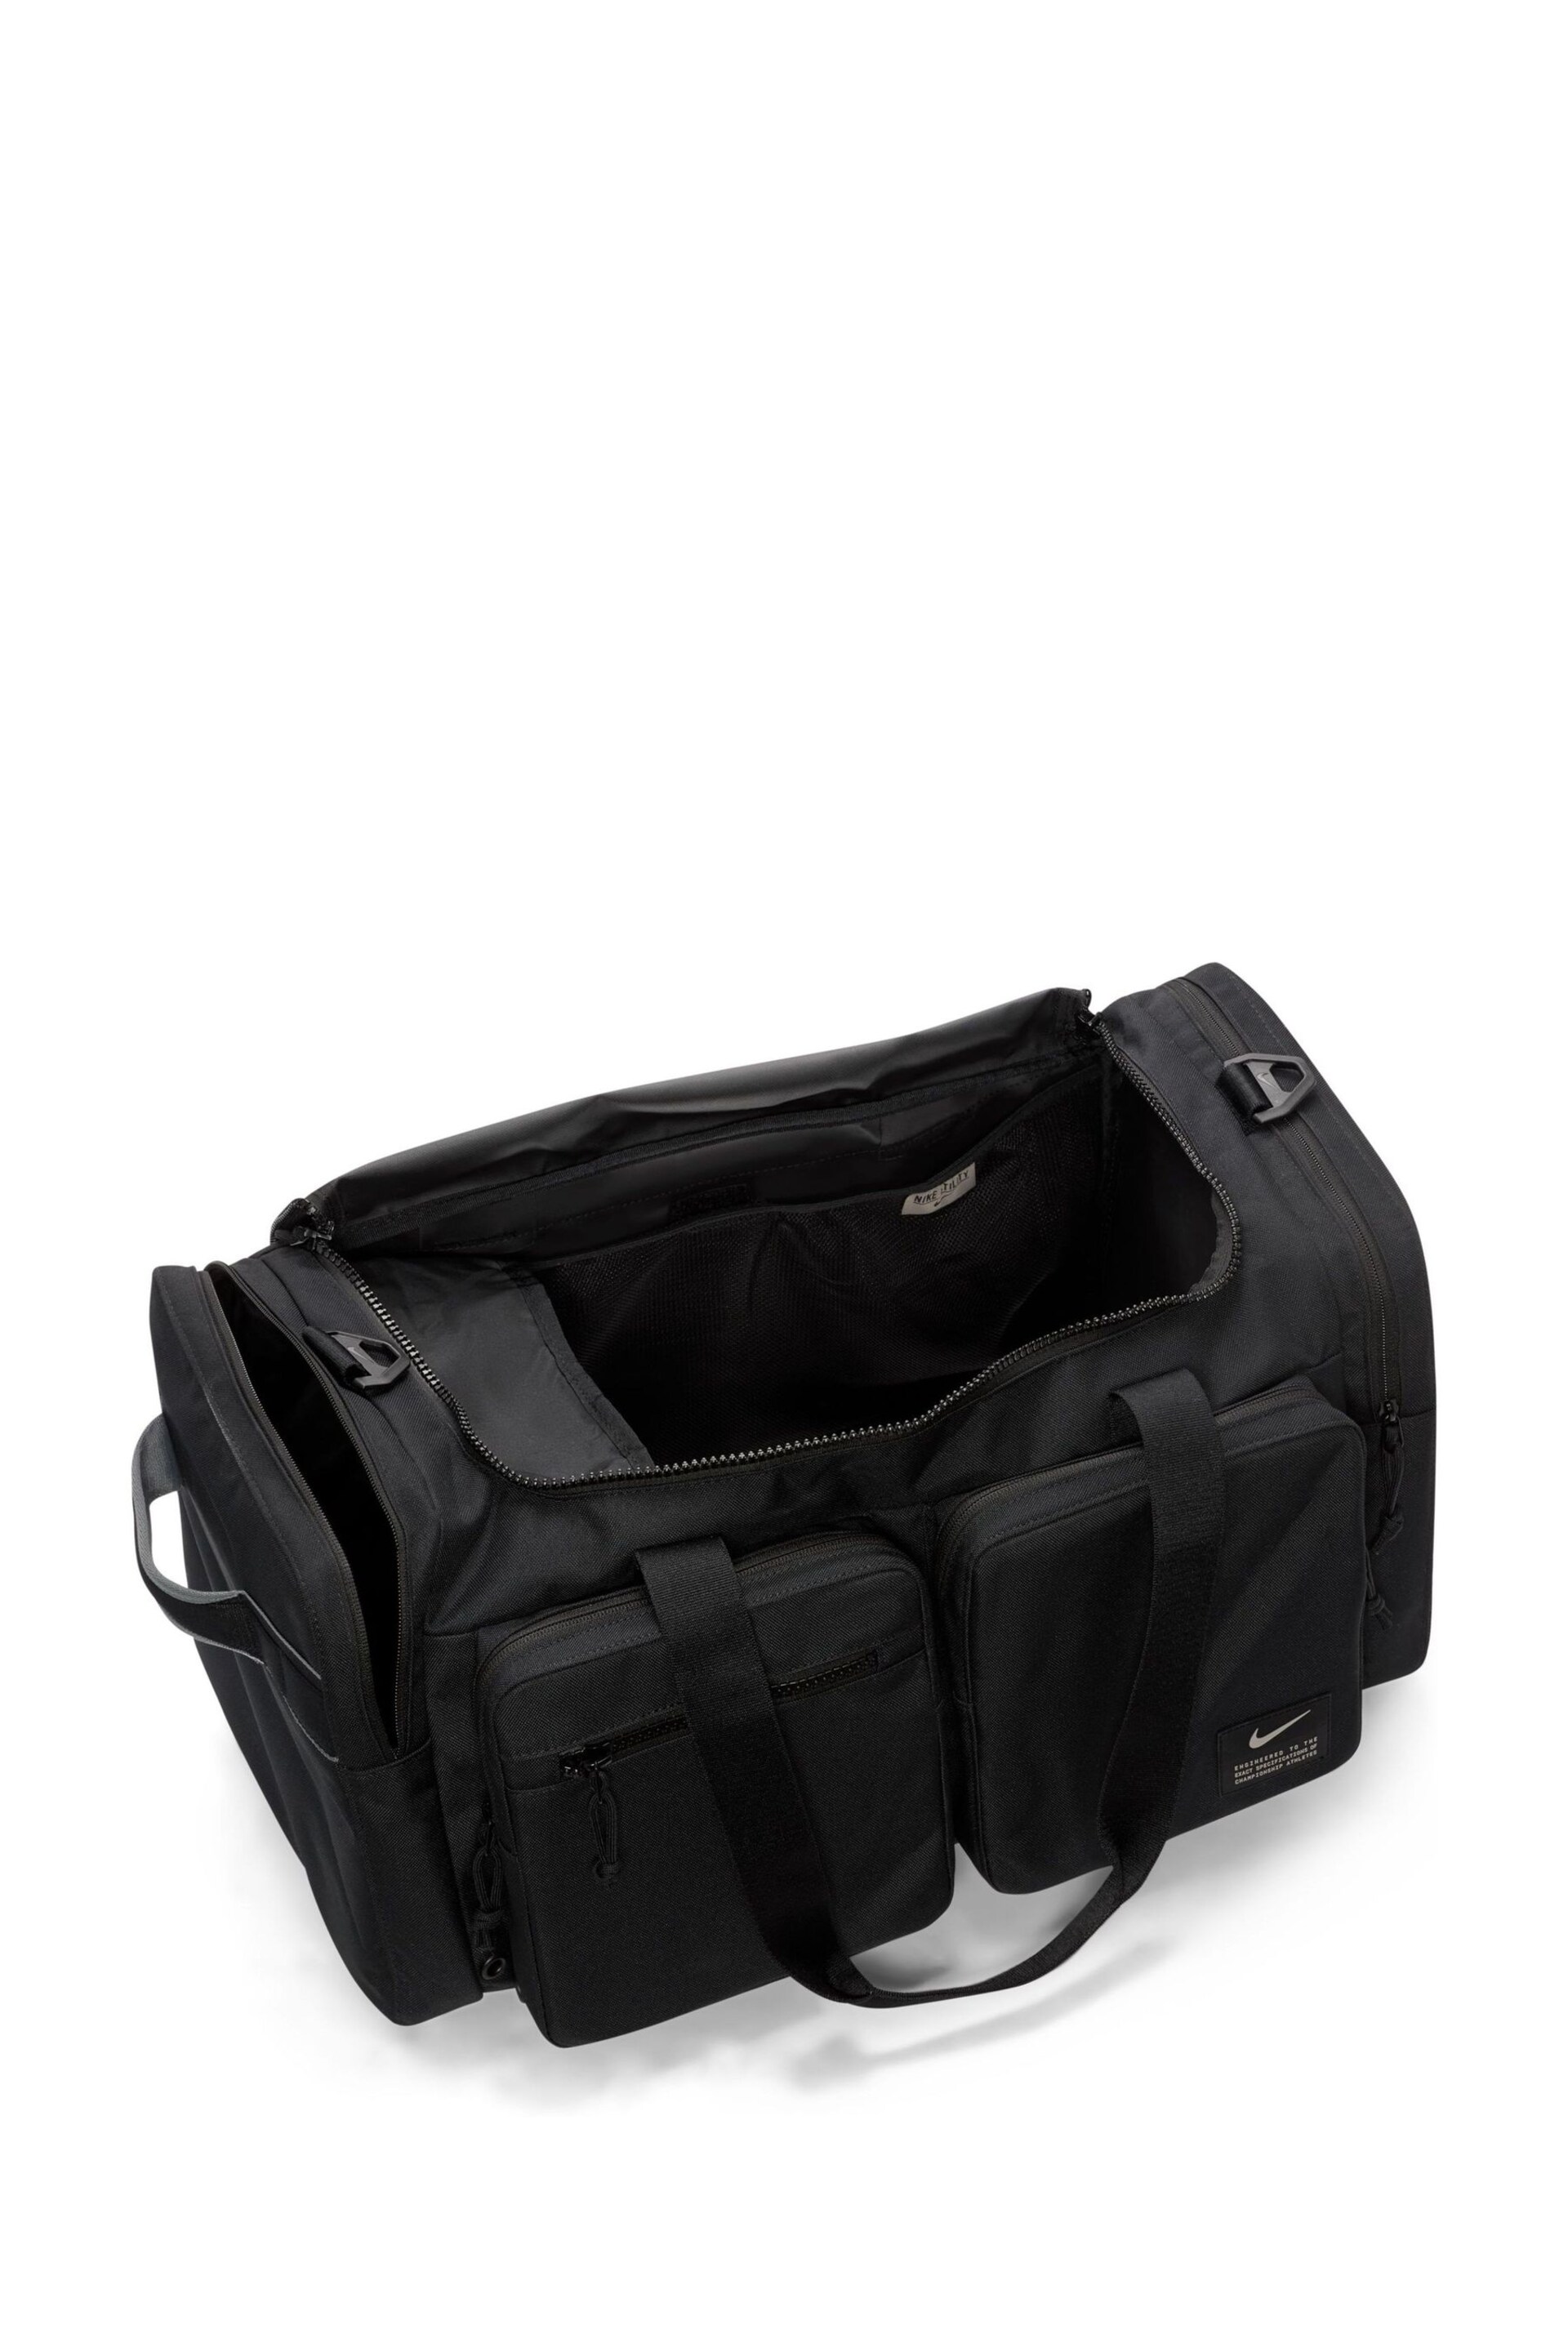 Nike Black Utility Power Training Duffel Bag - Image 10 of 12